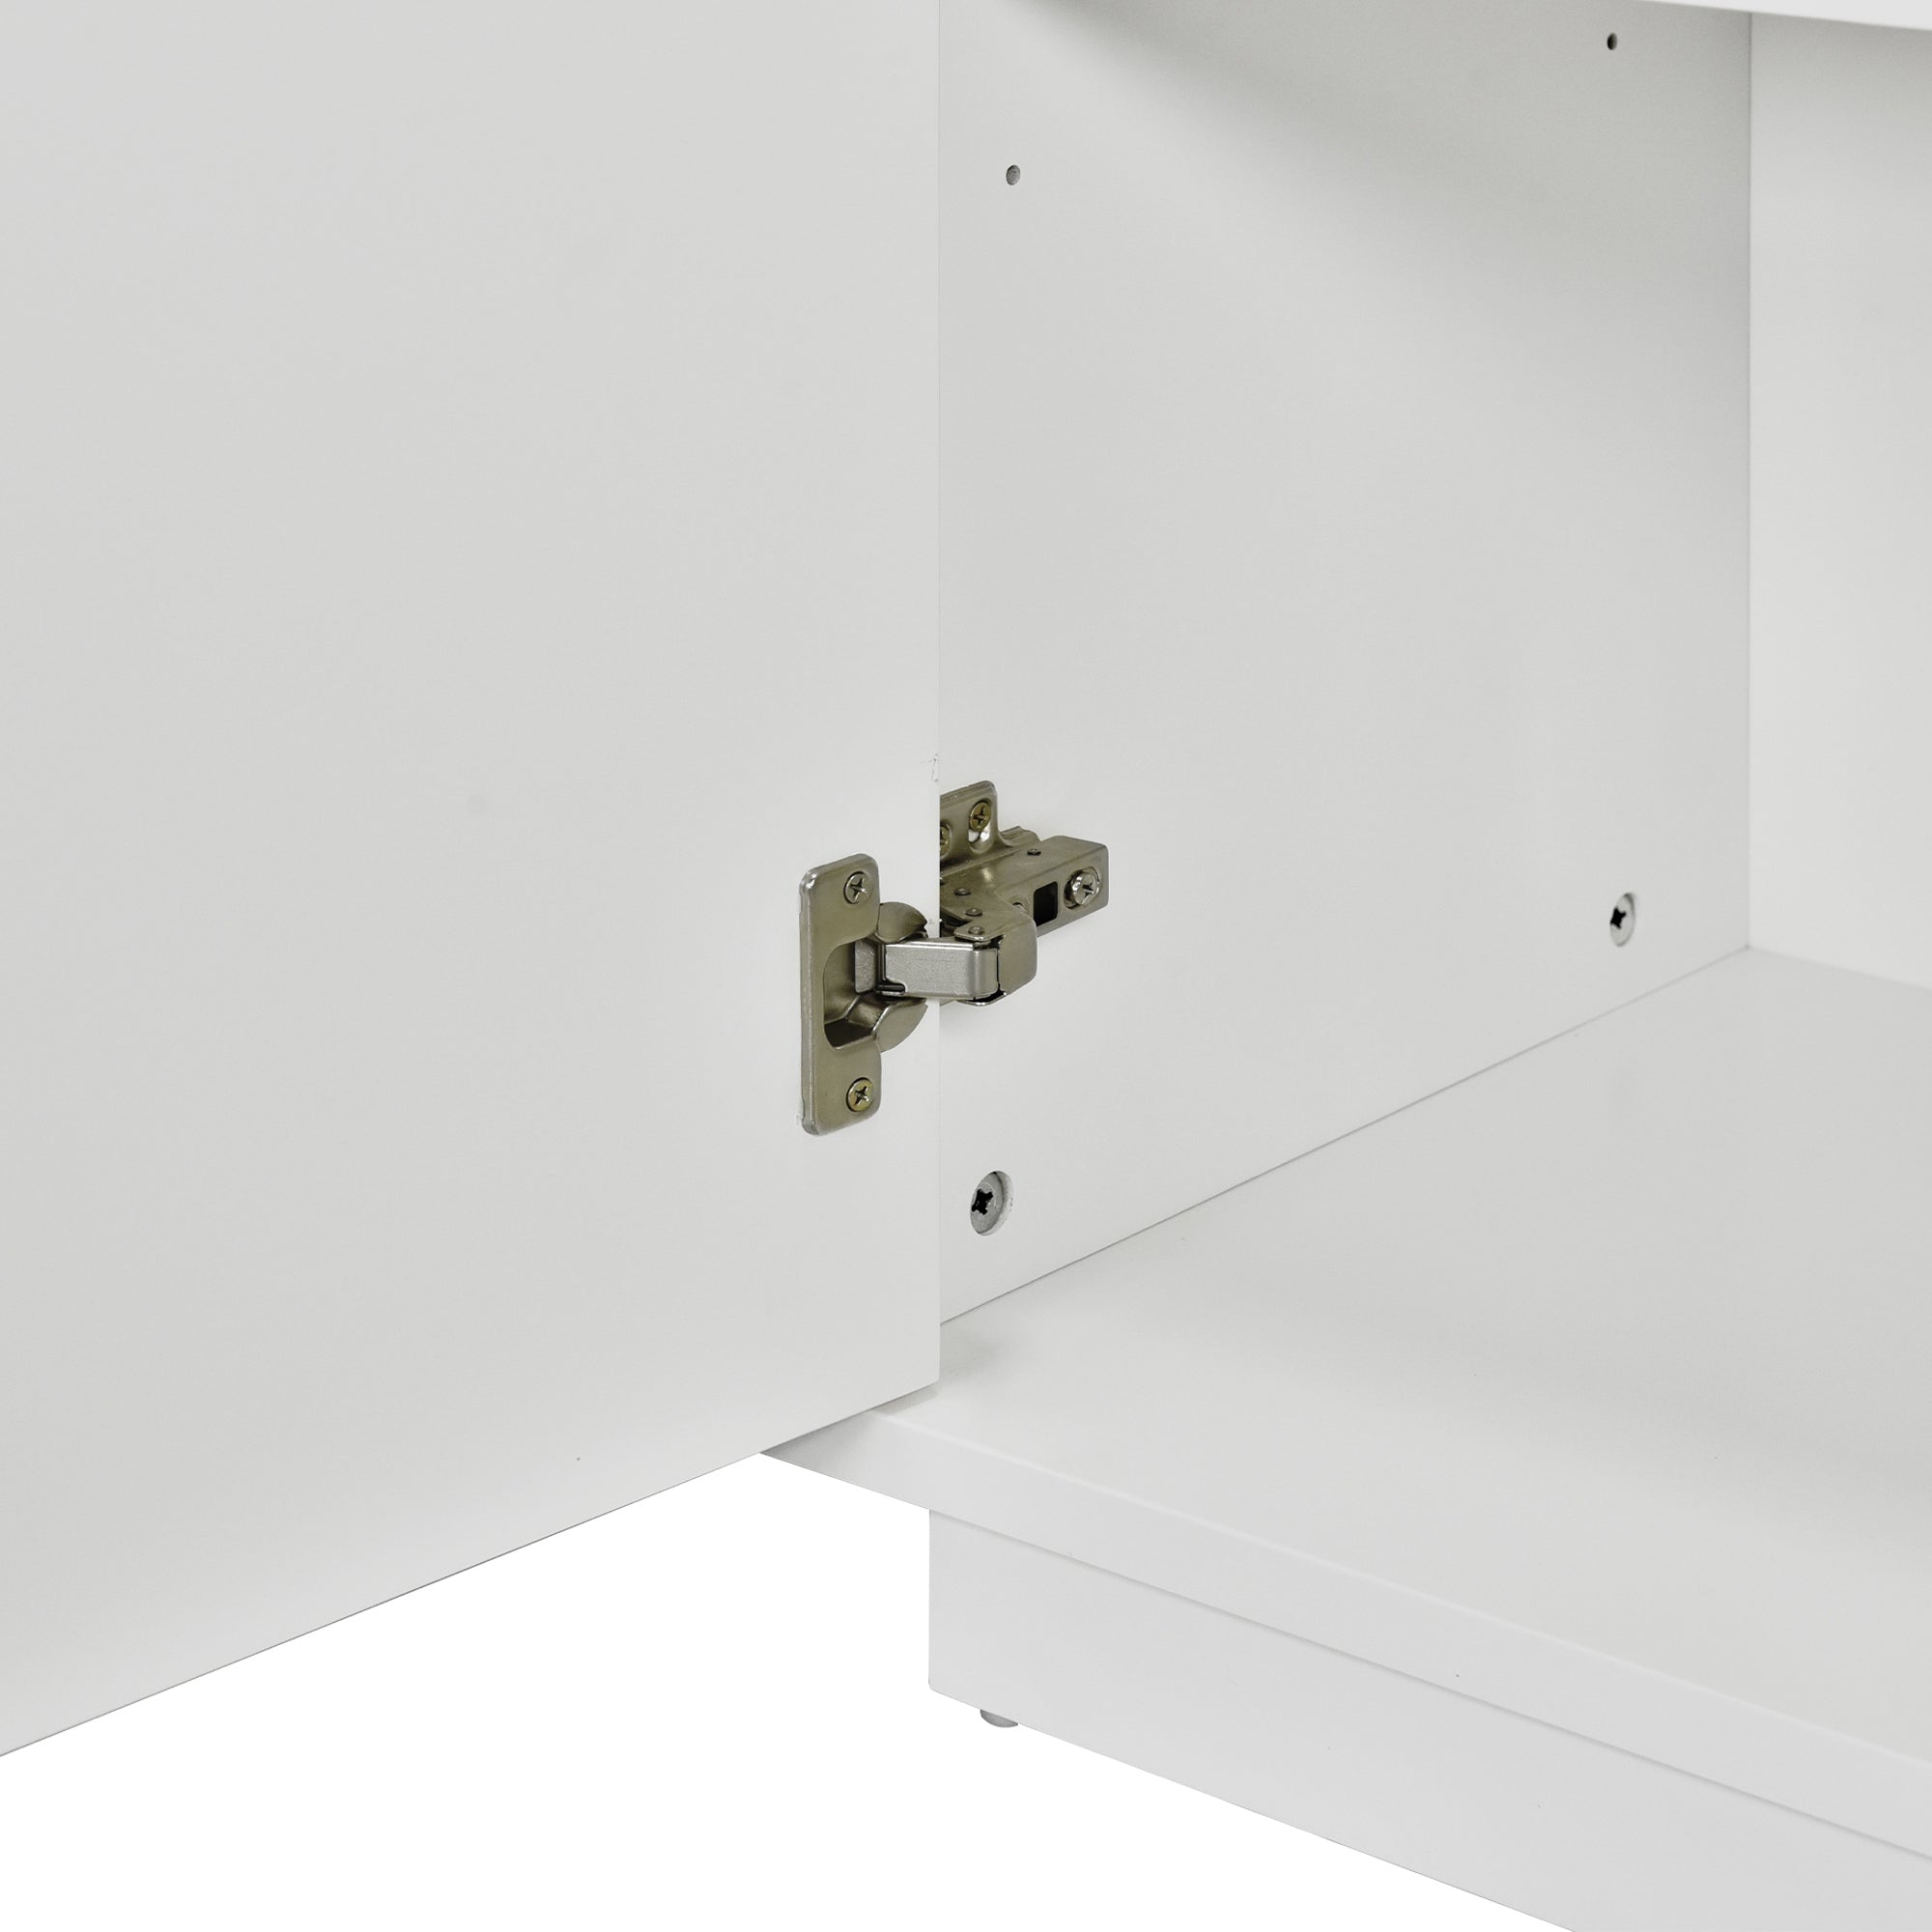 Modern Functional Large Storage Space Sideboard white-mdf